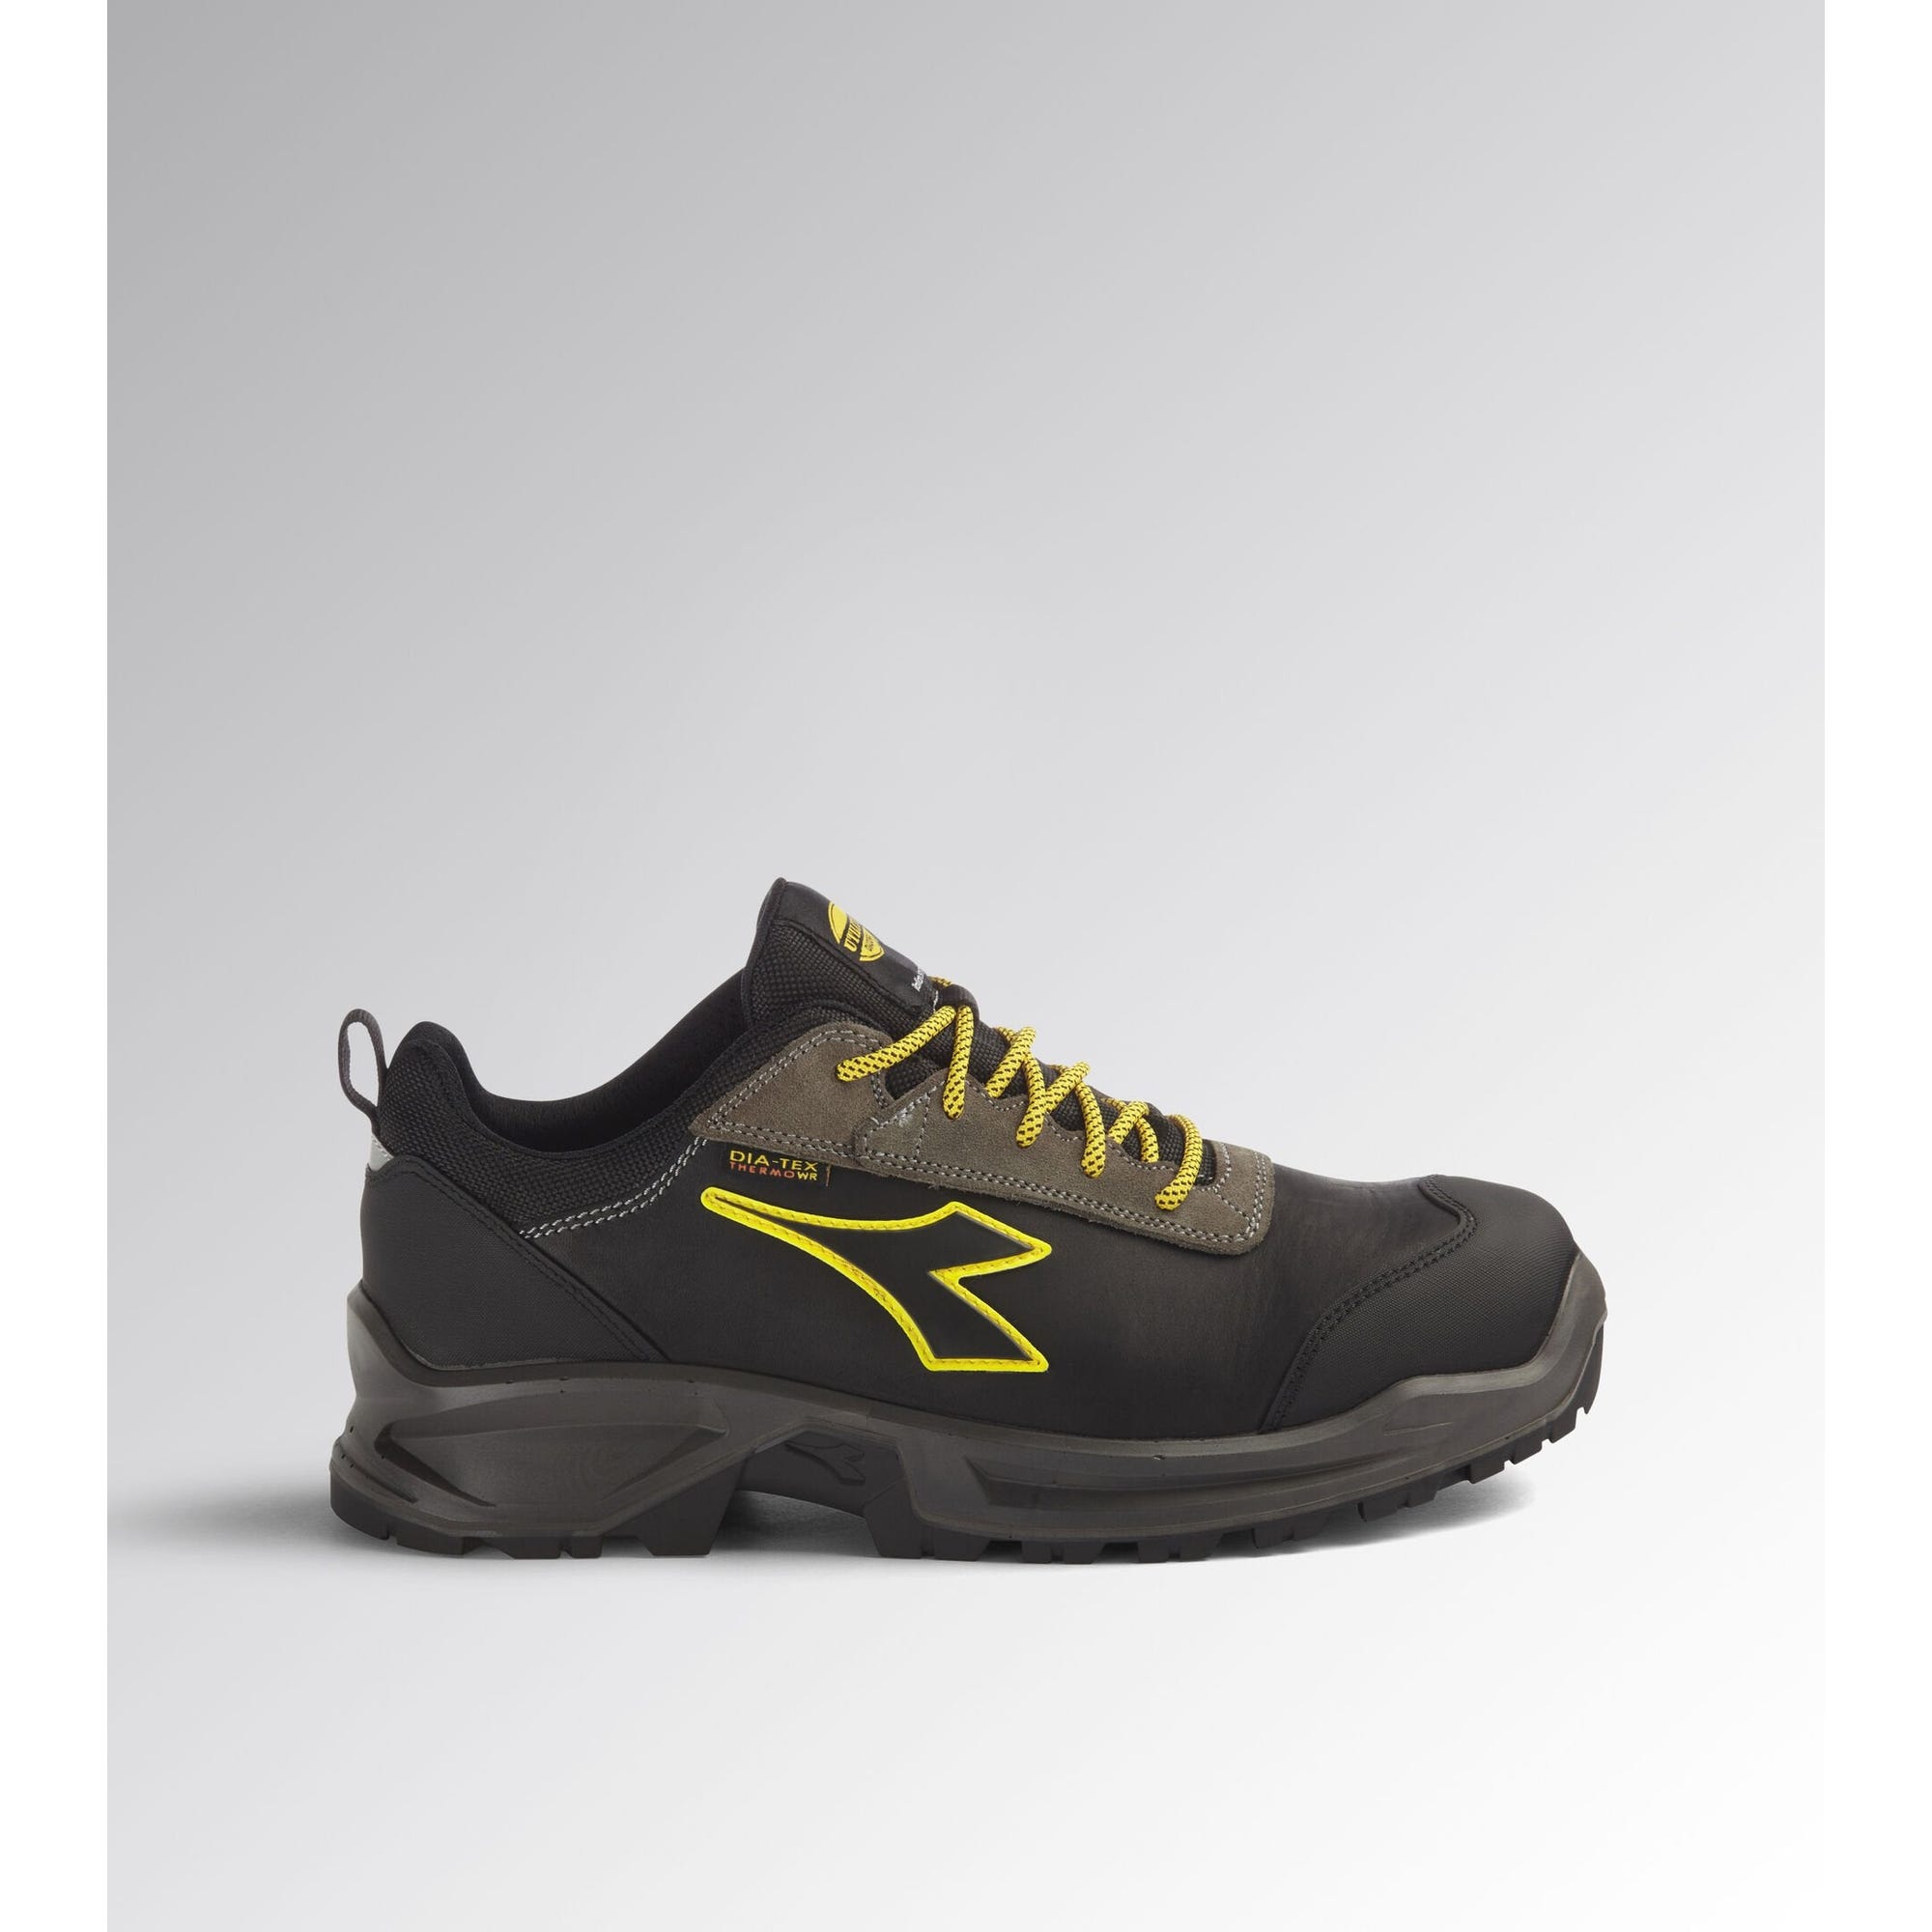 Chaussures imperméables thermo-isolantes SPORT DIATEX S3 Noir / Jaune 38 5